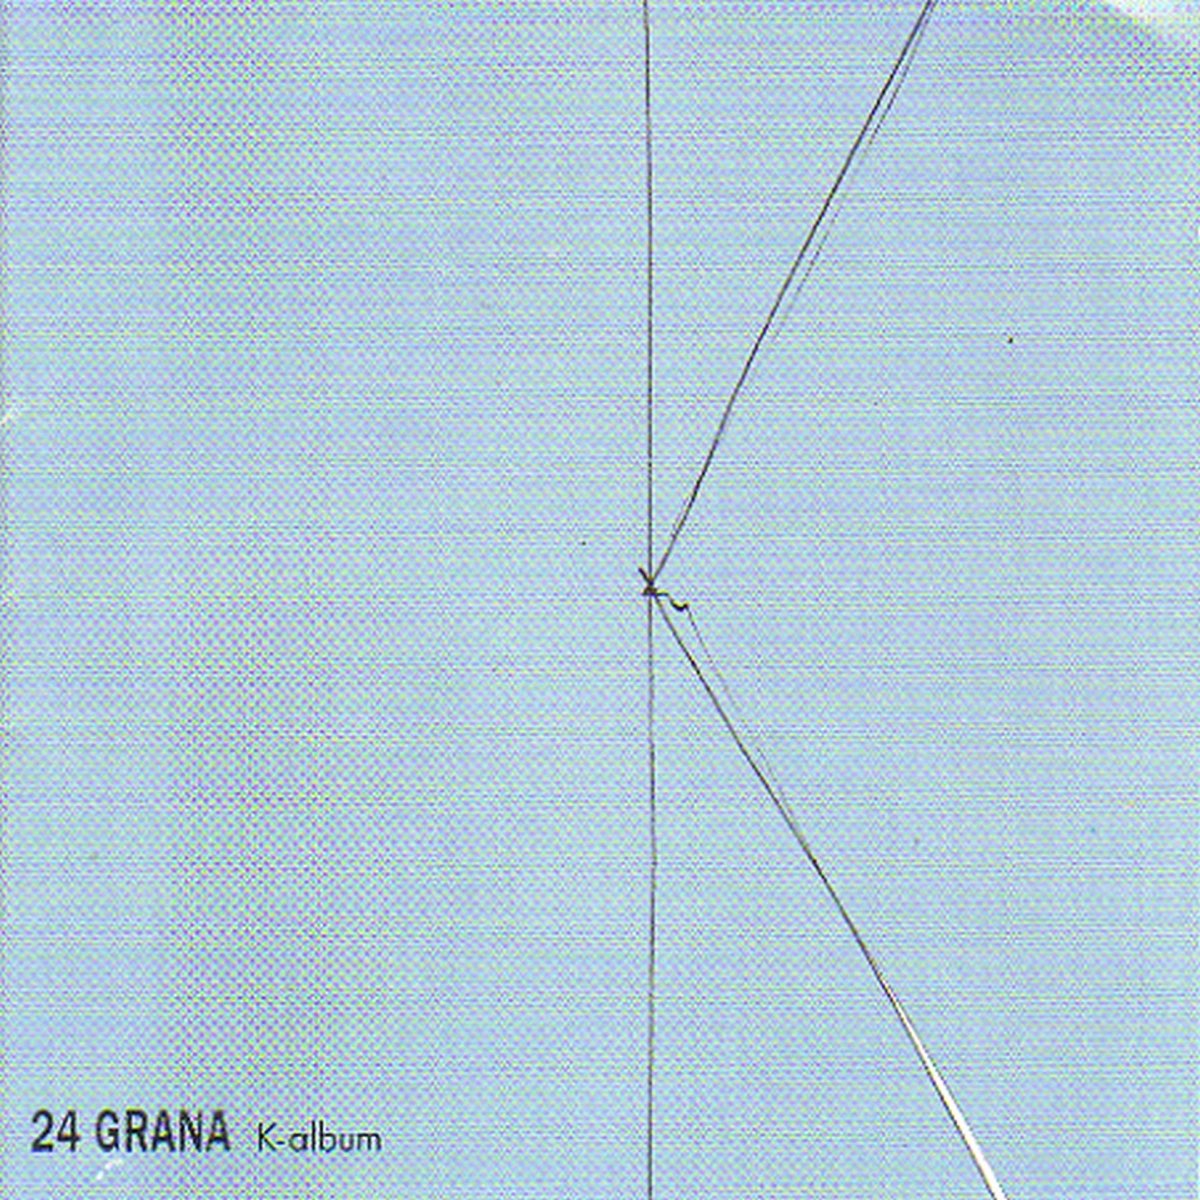 Copertina Vinile 33 giri K album di 24 Grana